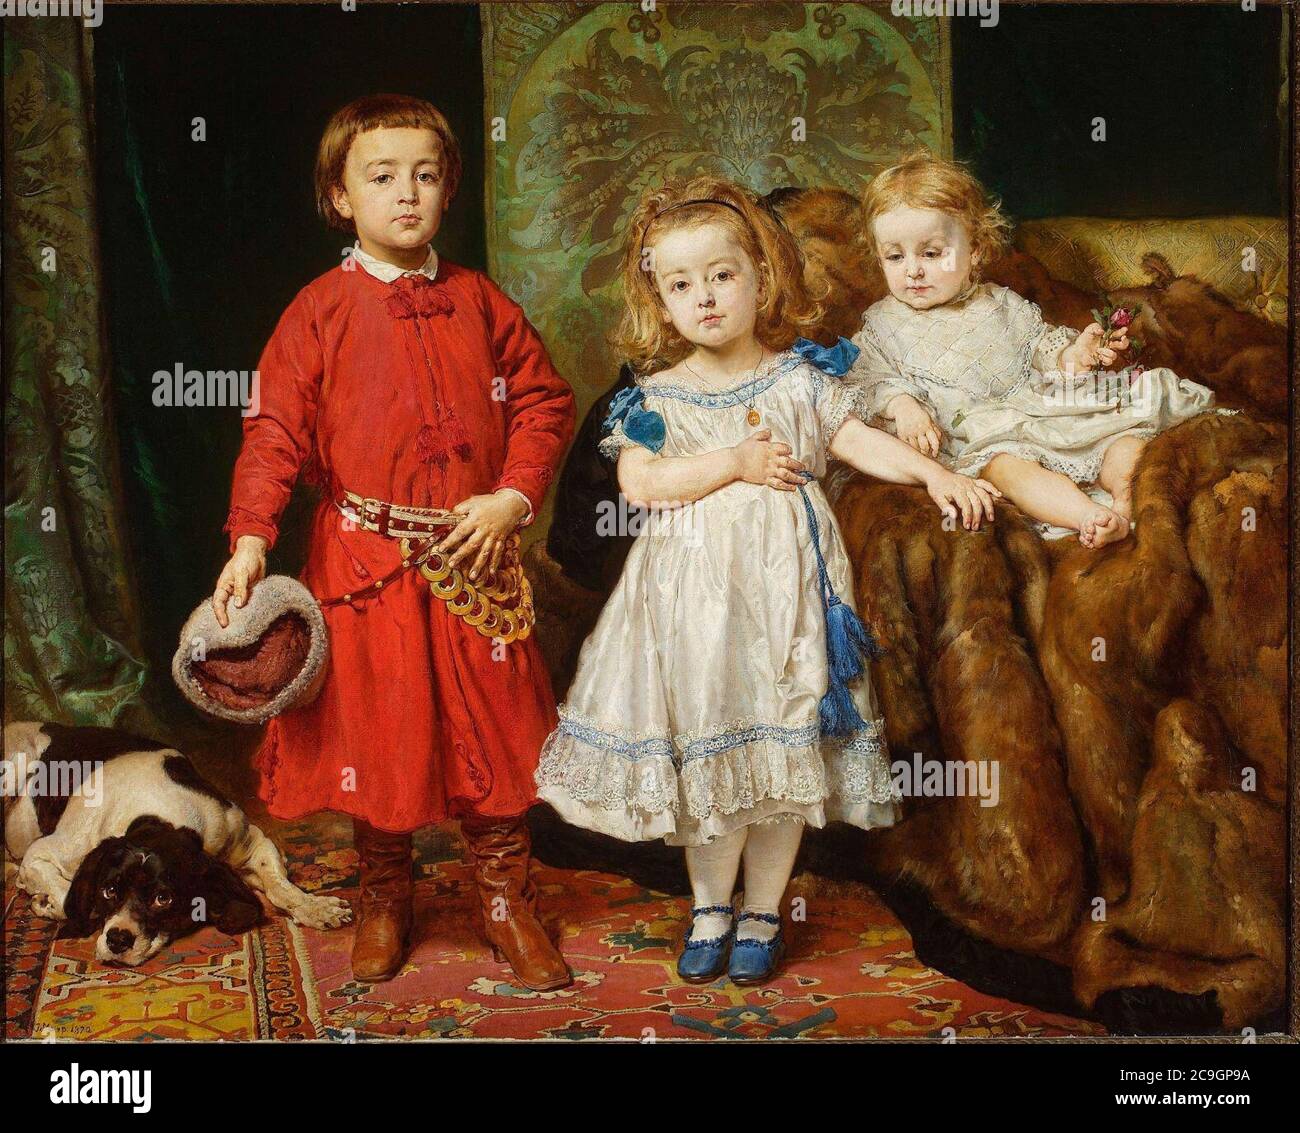 Jan Matejko - Portret trojga dzieci artysty. Stock Photo